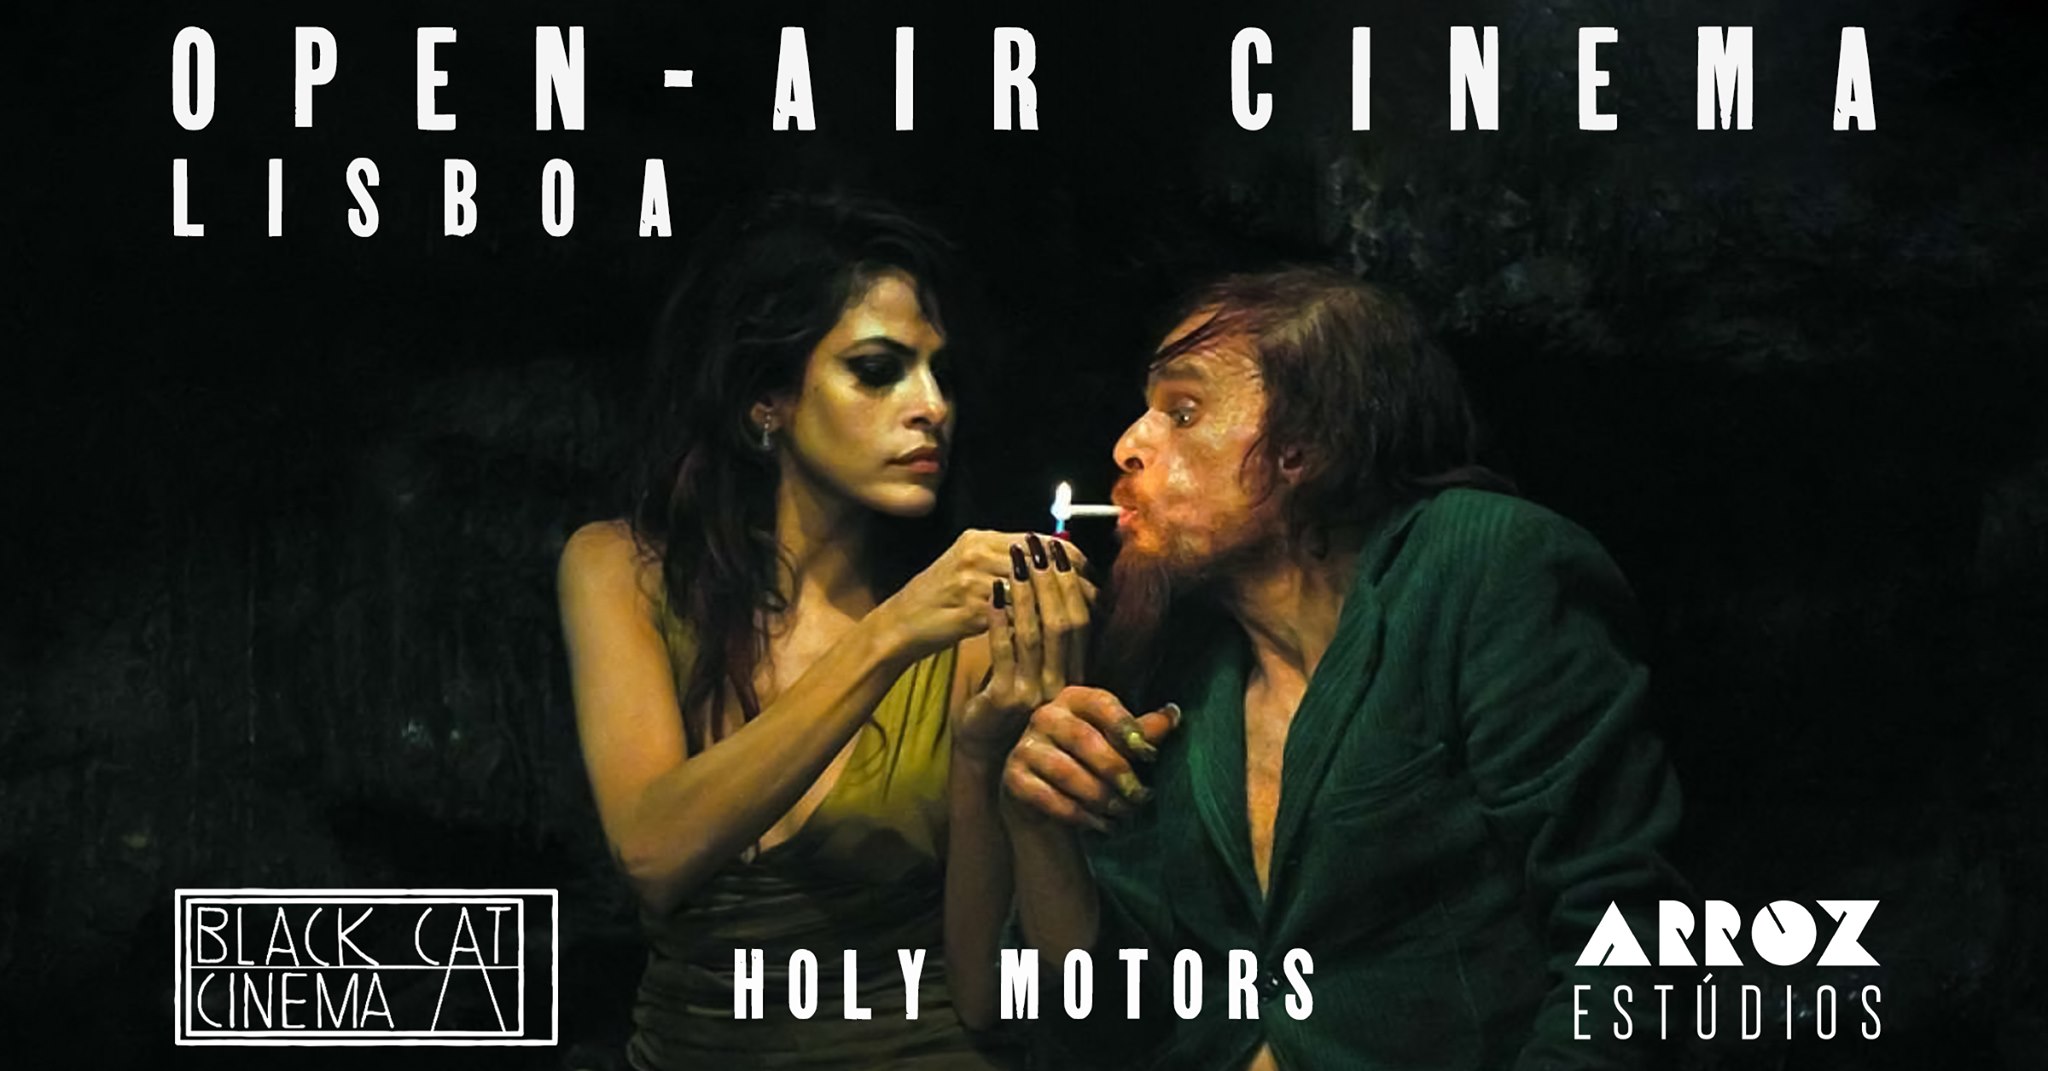 Open-air cinema: Holy Motors